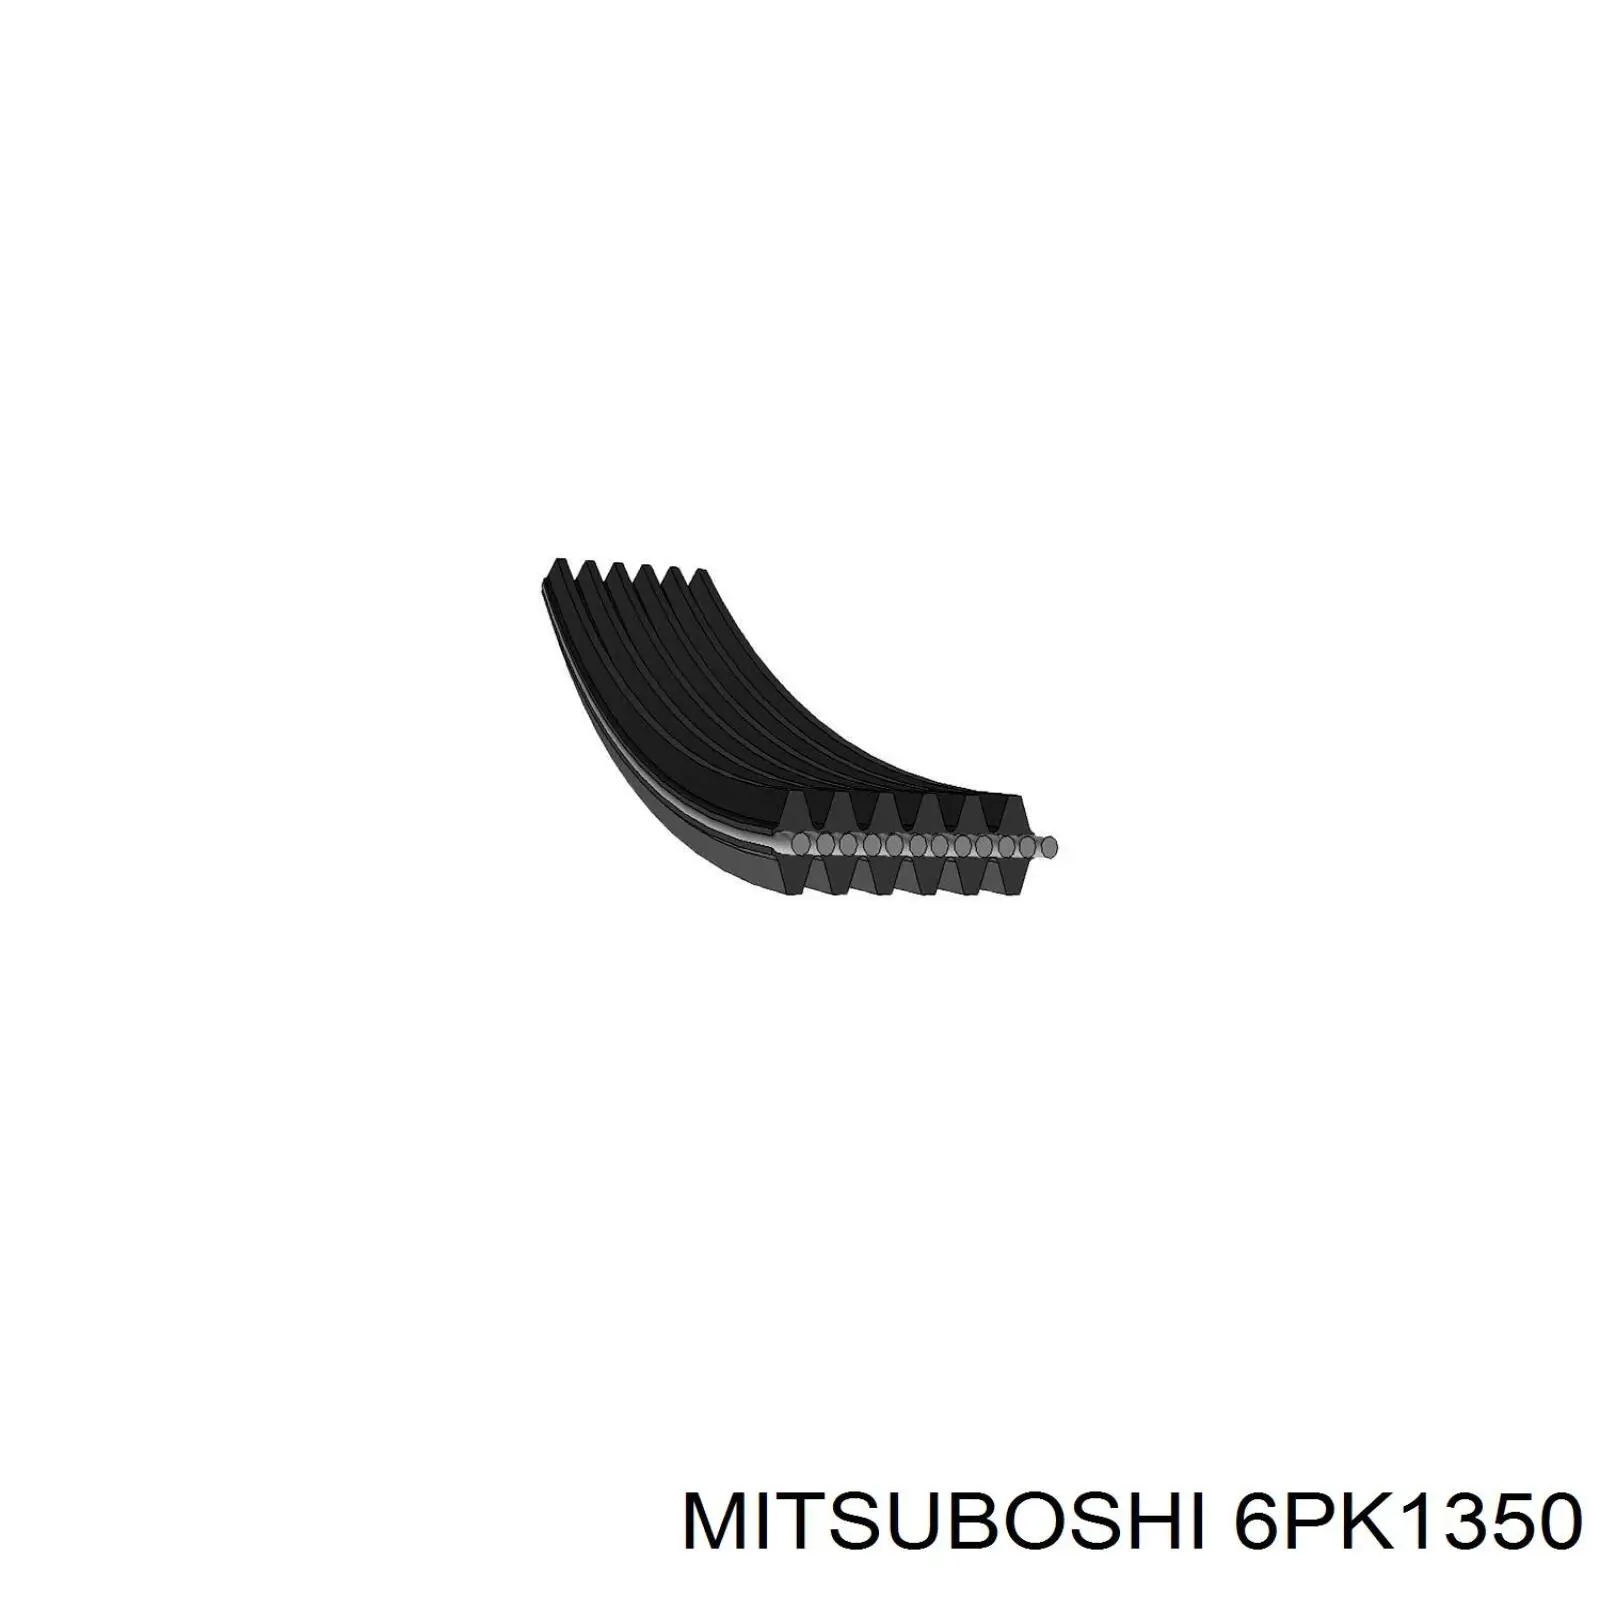 6PK1350 Mitsuboshi correa trapezoidal